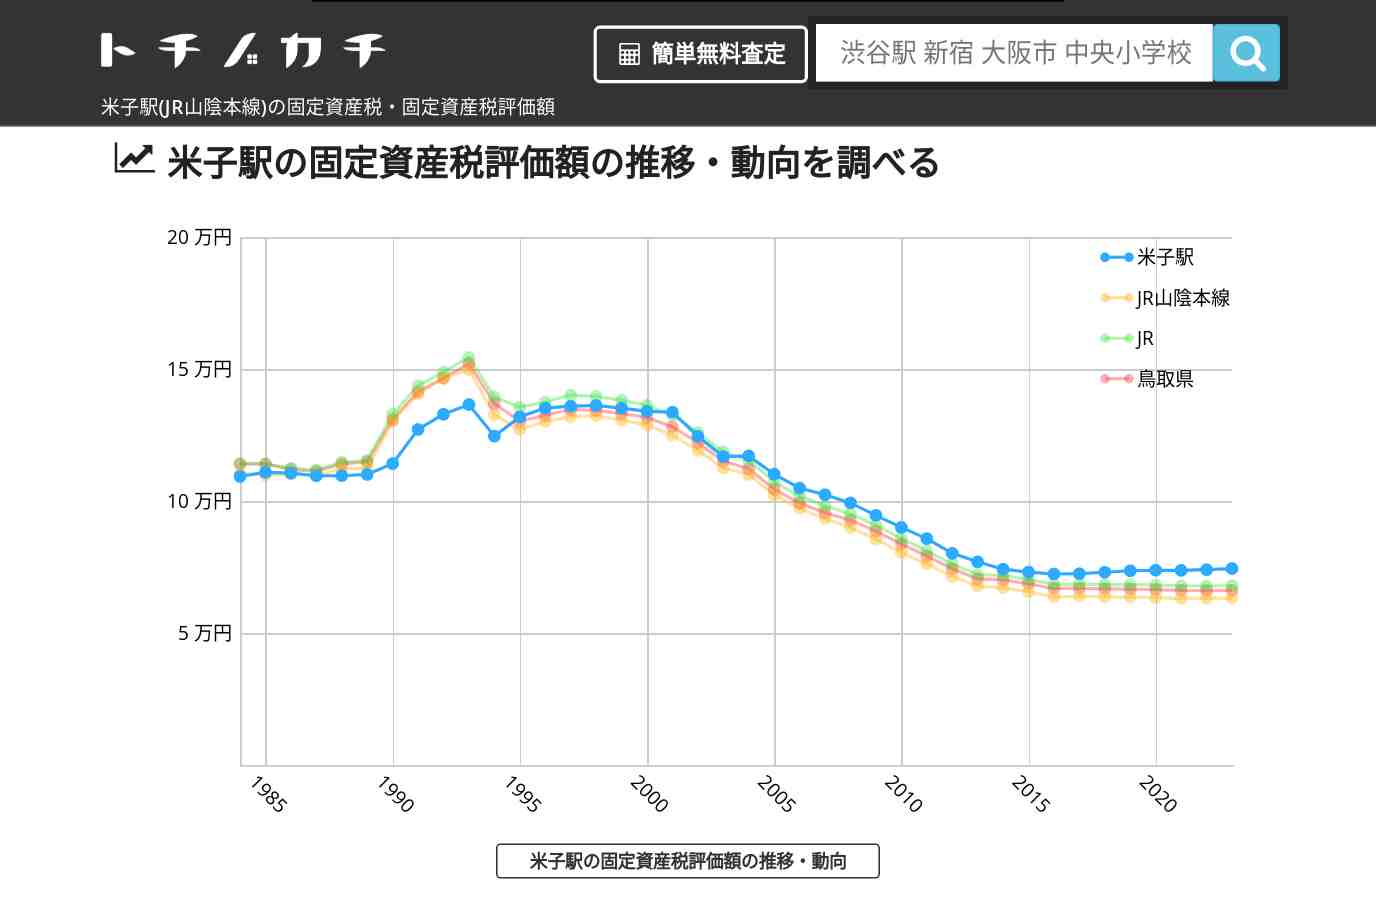 米子駅(JR山陰本線)の固定資産税・固定資産税評価額 | トチノカチ